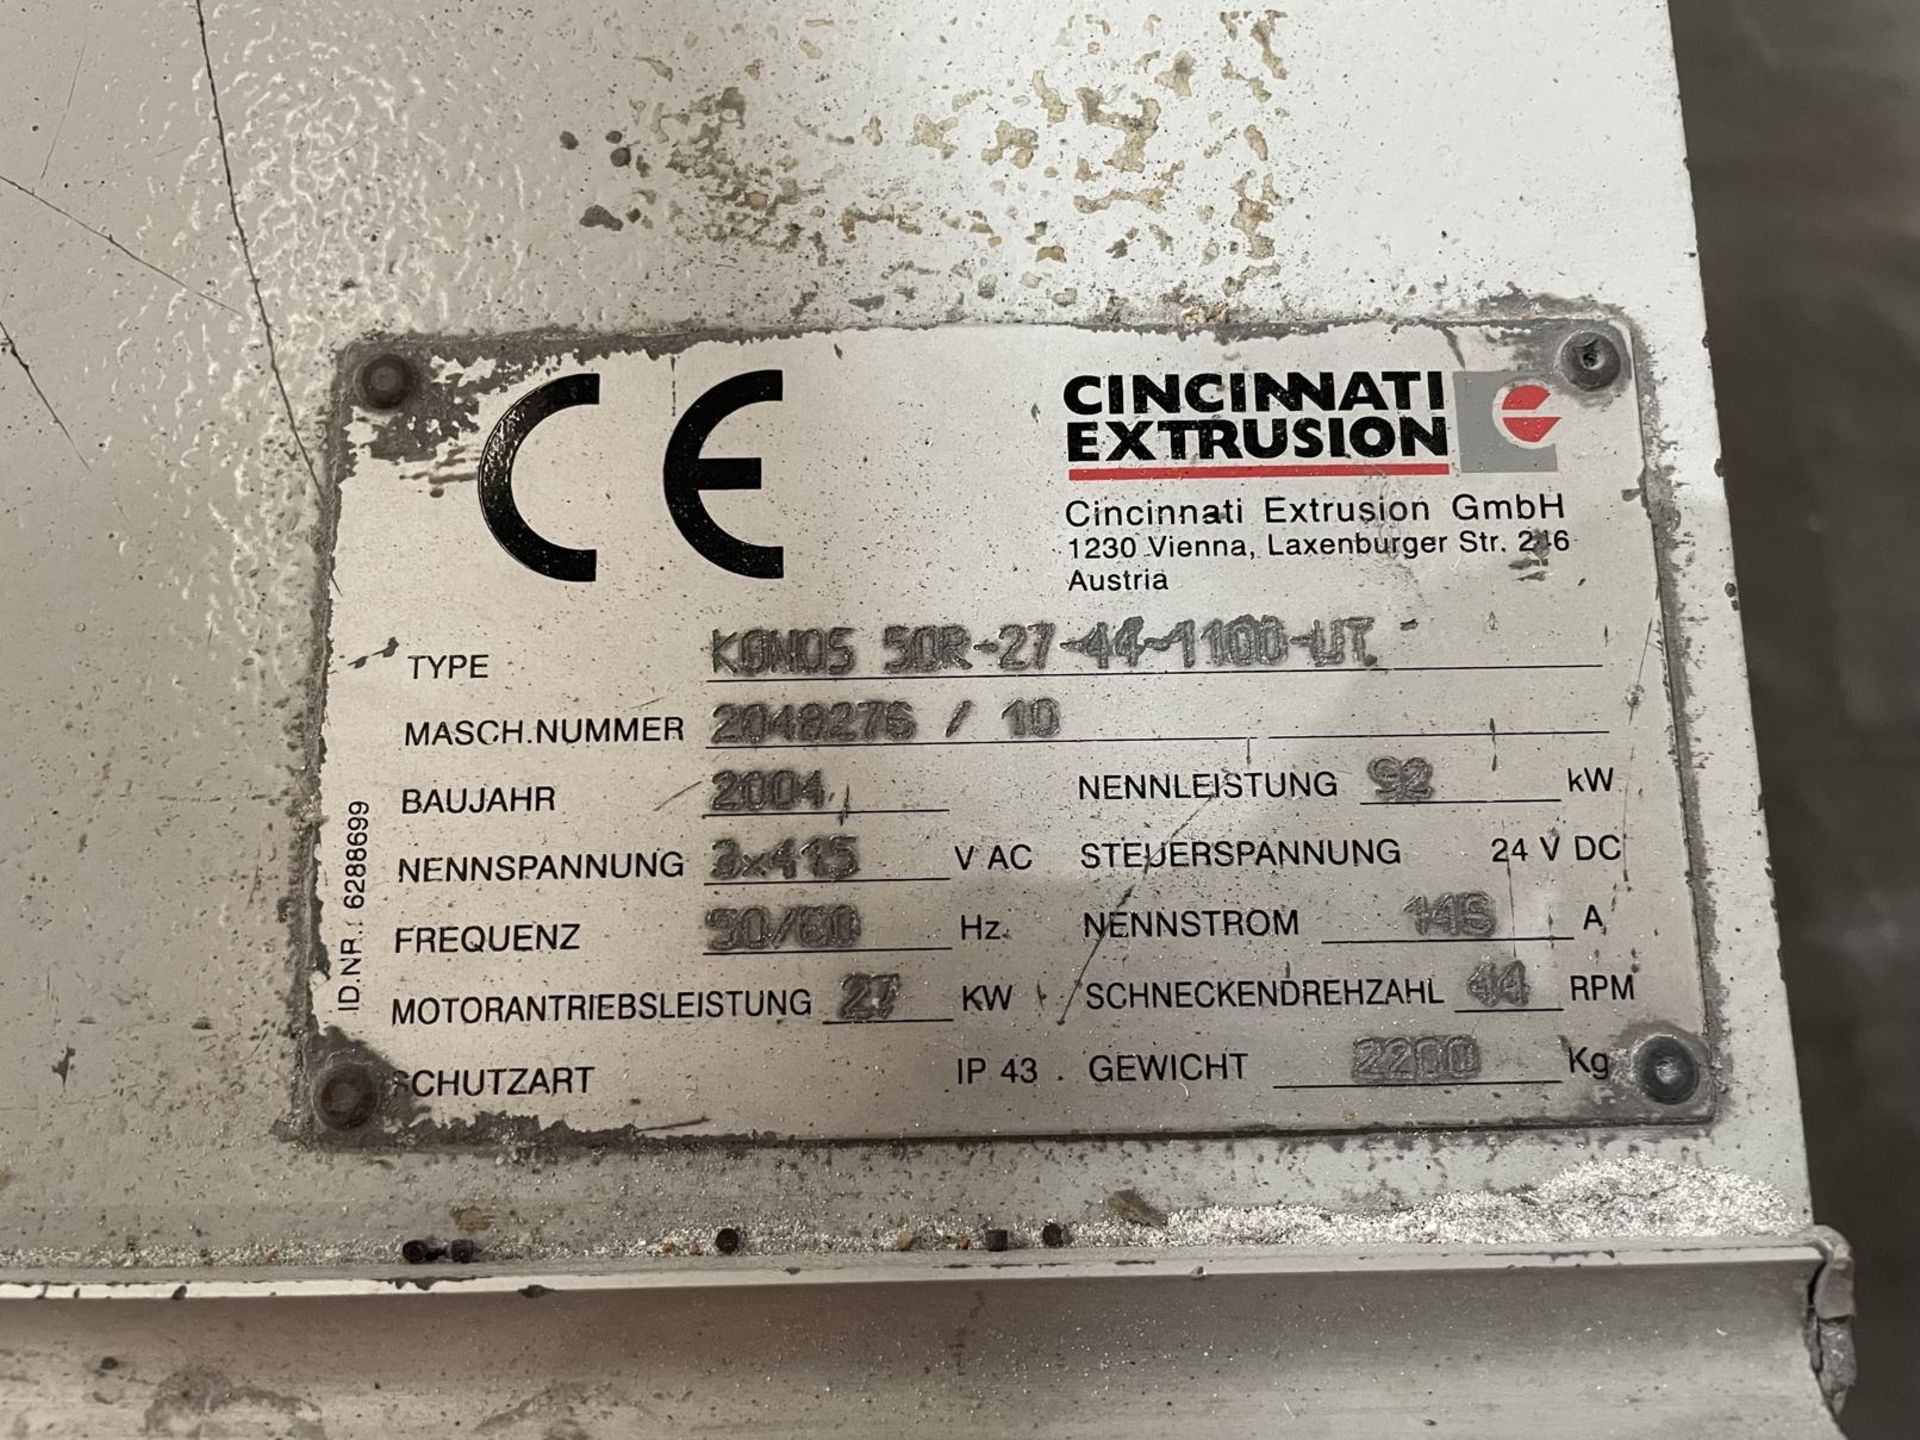 Cincinnati KONOS 50R-27-44-1100-HT Plastic Extrusion Machine With Cincinnati Exc Pro-XP ControlsSe - Image 6 of 6